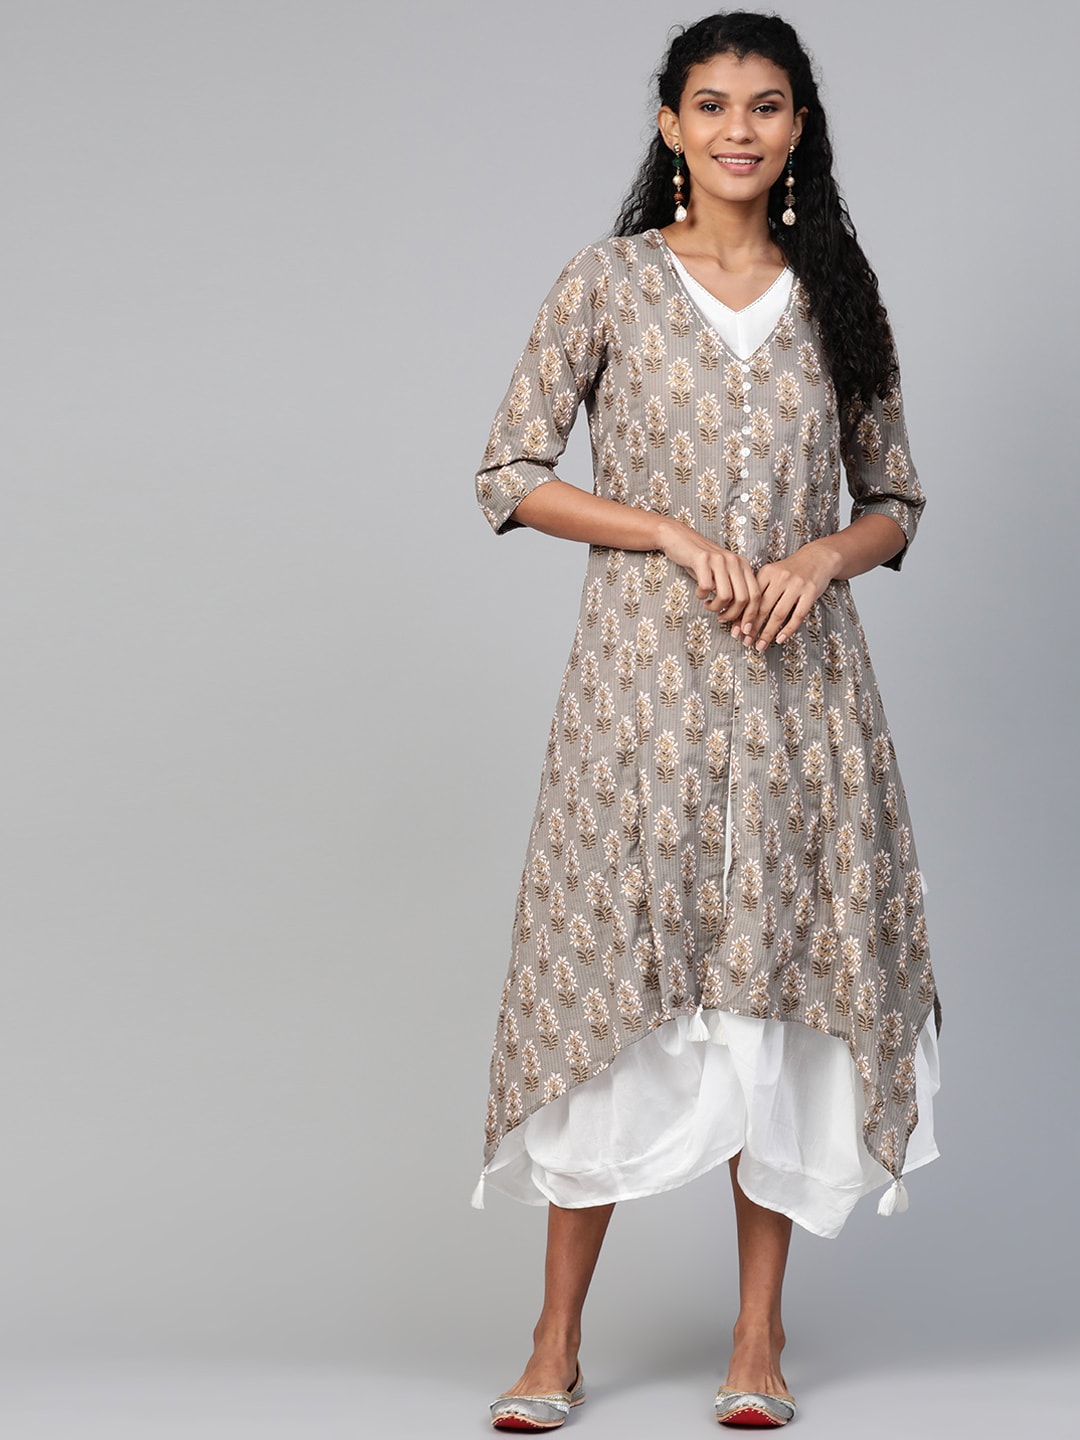 Biba Women Grey & White Layered Printed A-Line Dress Price in India